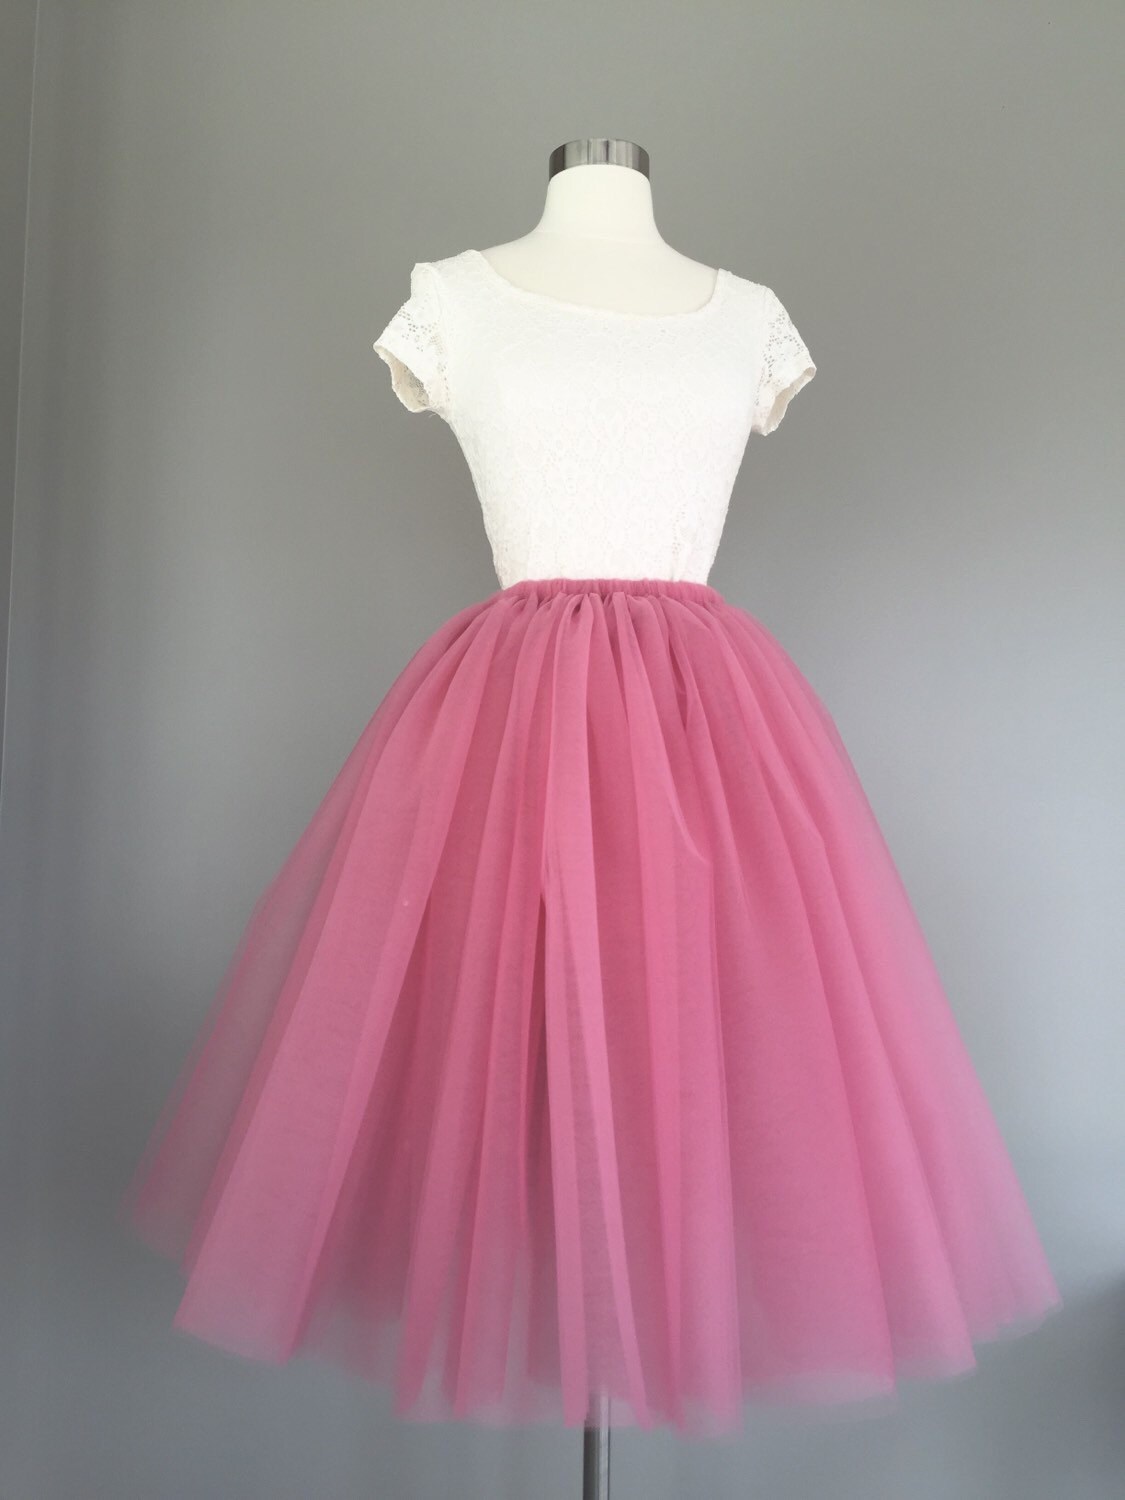 Tulle skirt adult tutu dusty rose tutu pink tulle skirt